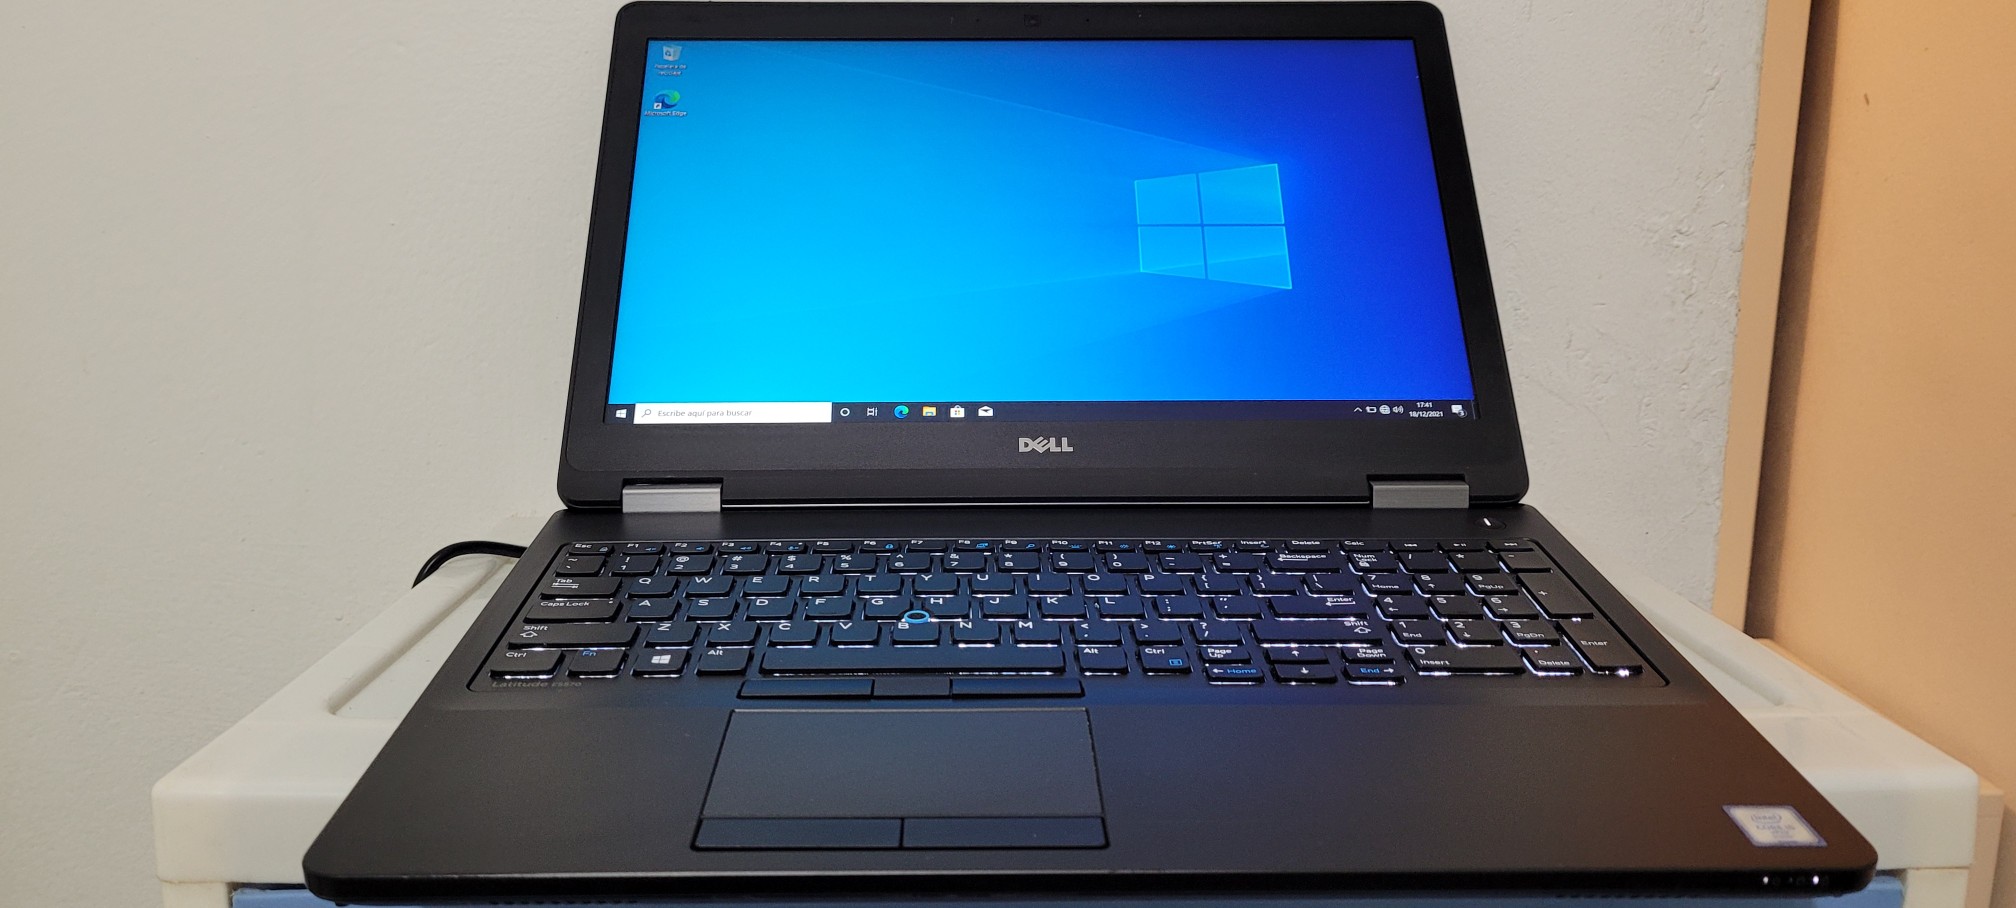 computadoras y laptops - Dell 5550 17 Pulg Core i7 Ram 8gb Disco 1TB Full hdmi 0